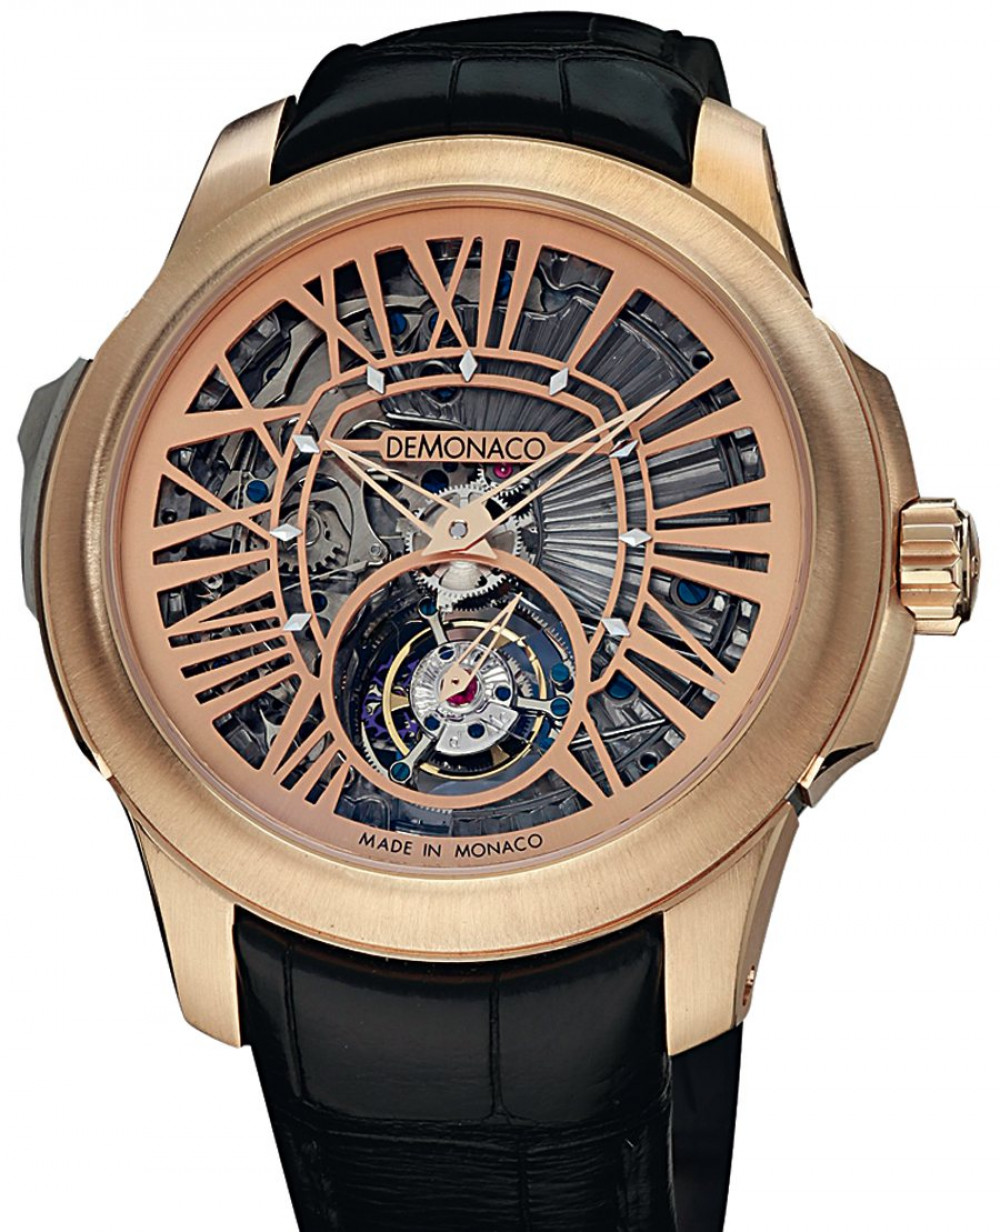 Zegarek firmy Ateliers deMonaco, model Grande Tourbillon Minute Repeater